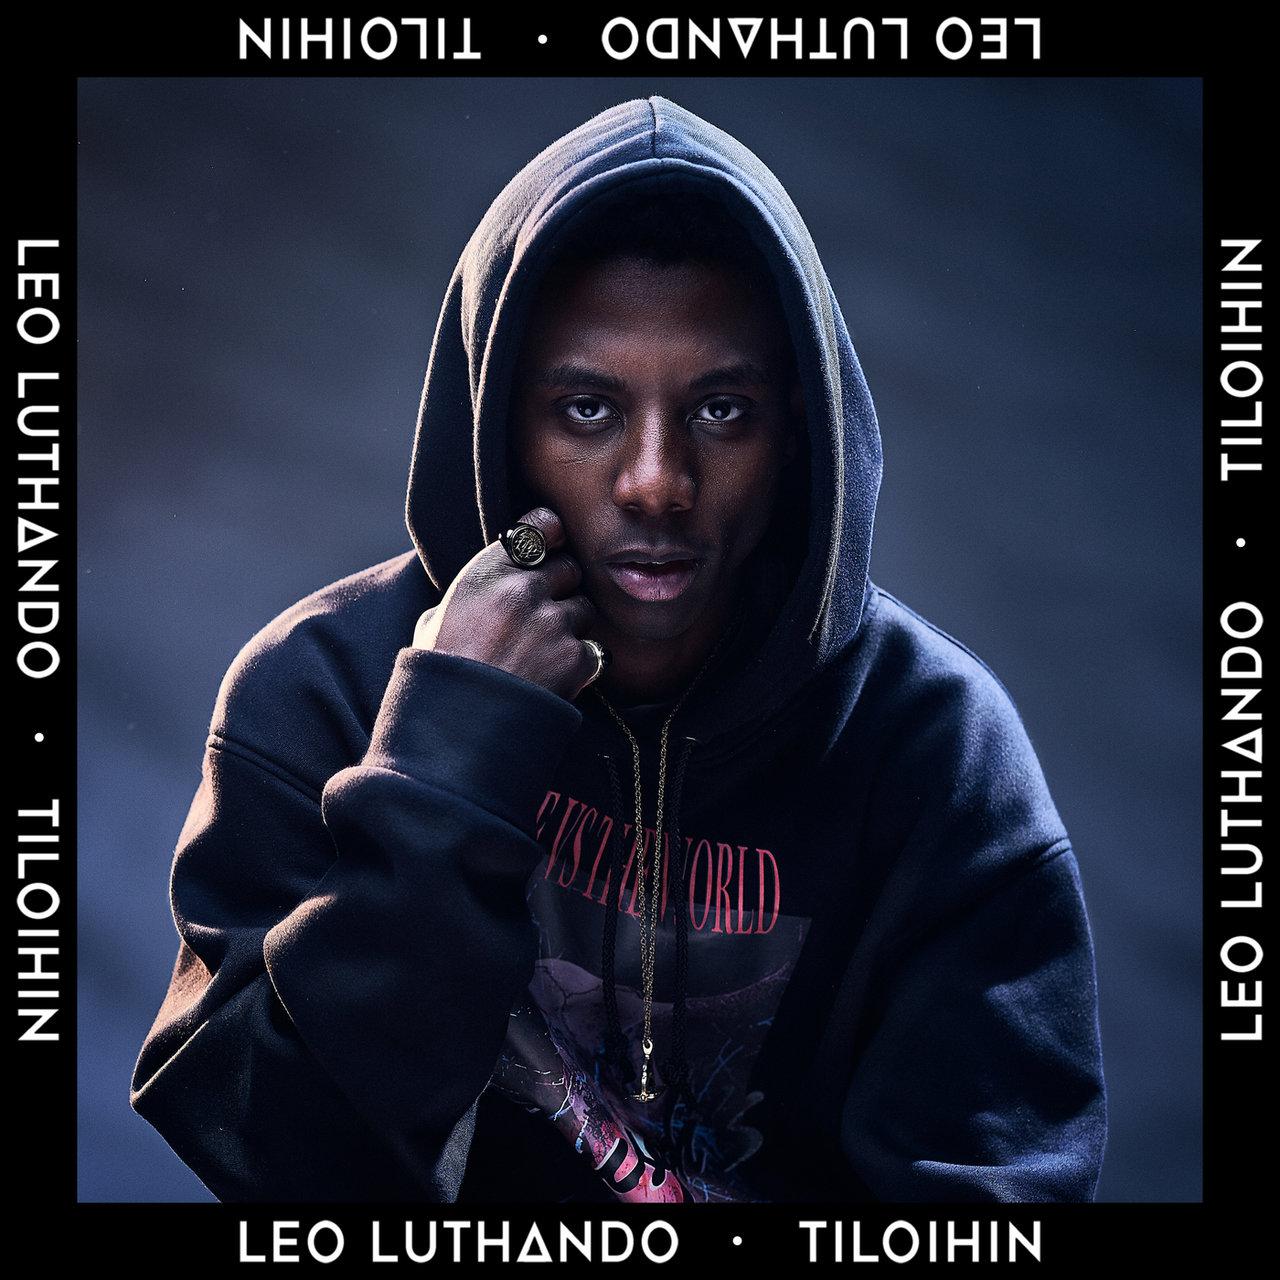 Leo Luthando – Tiloihin